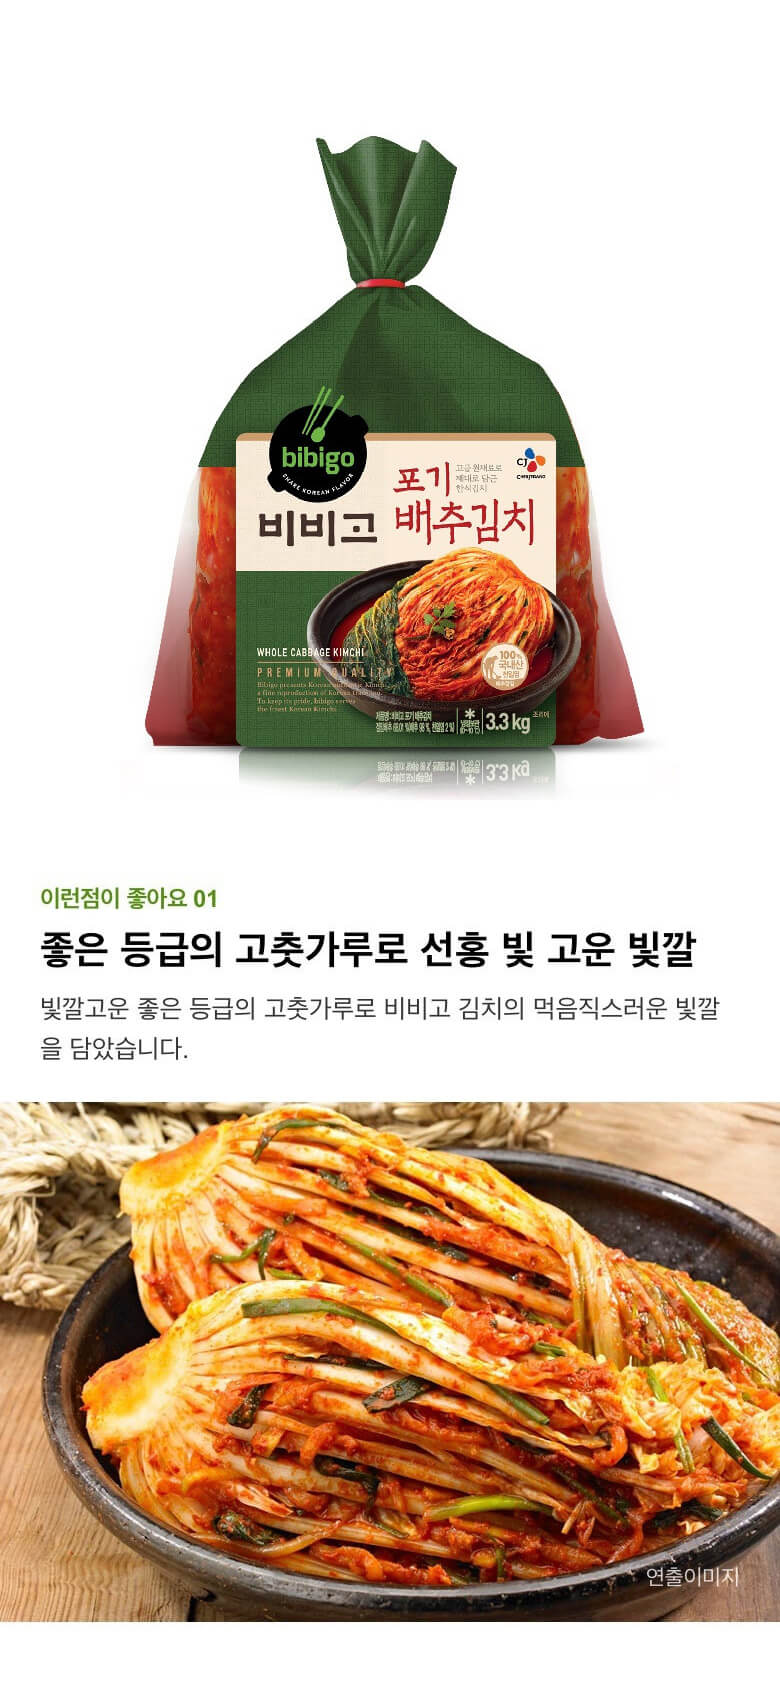 韓國食品-[CJ] Bibigo Whole Cabbage Kimchi 3.3kg